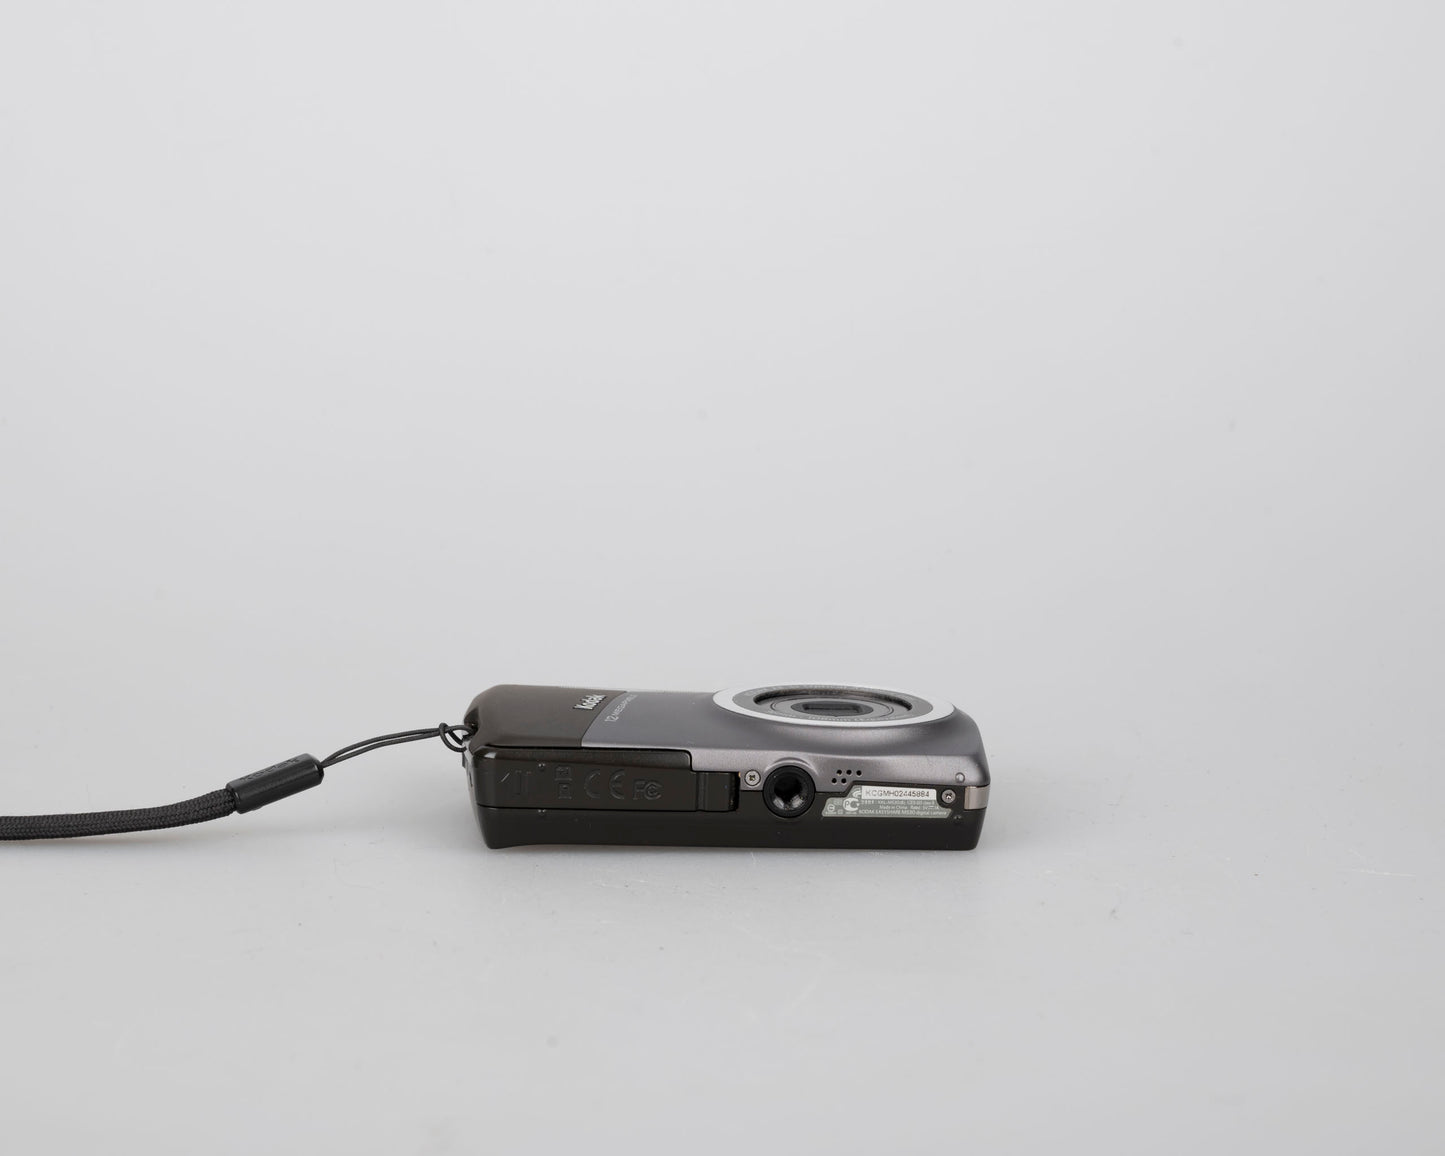 Kodak Easyshare M530 12 MP CCD sensor digicam w/ charger + battery (uses SD card memory)